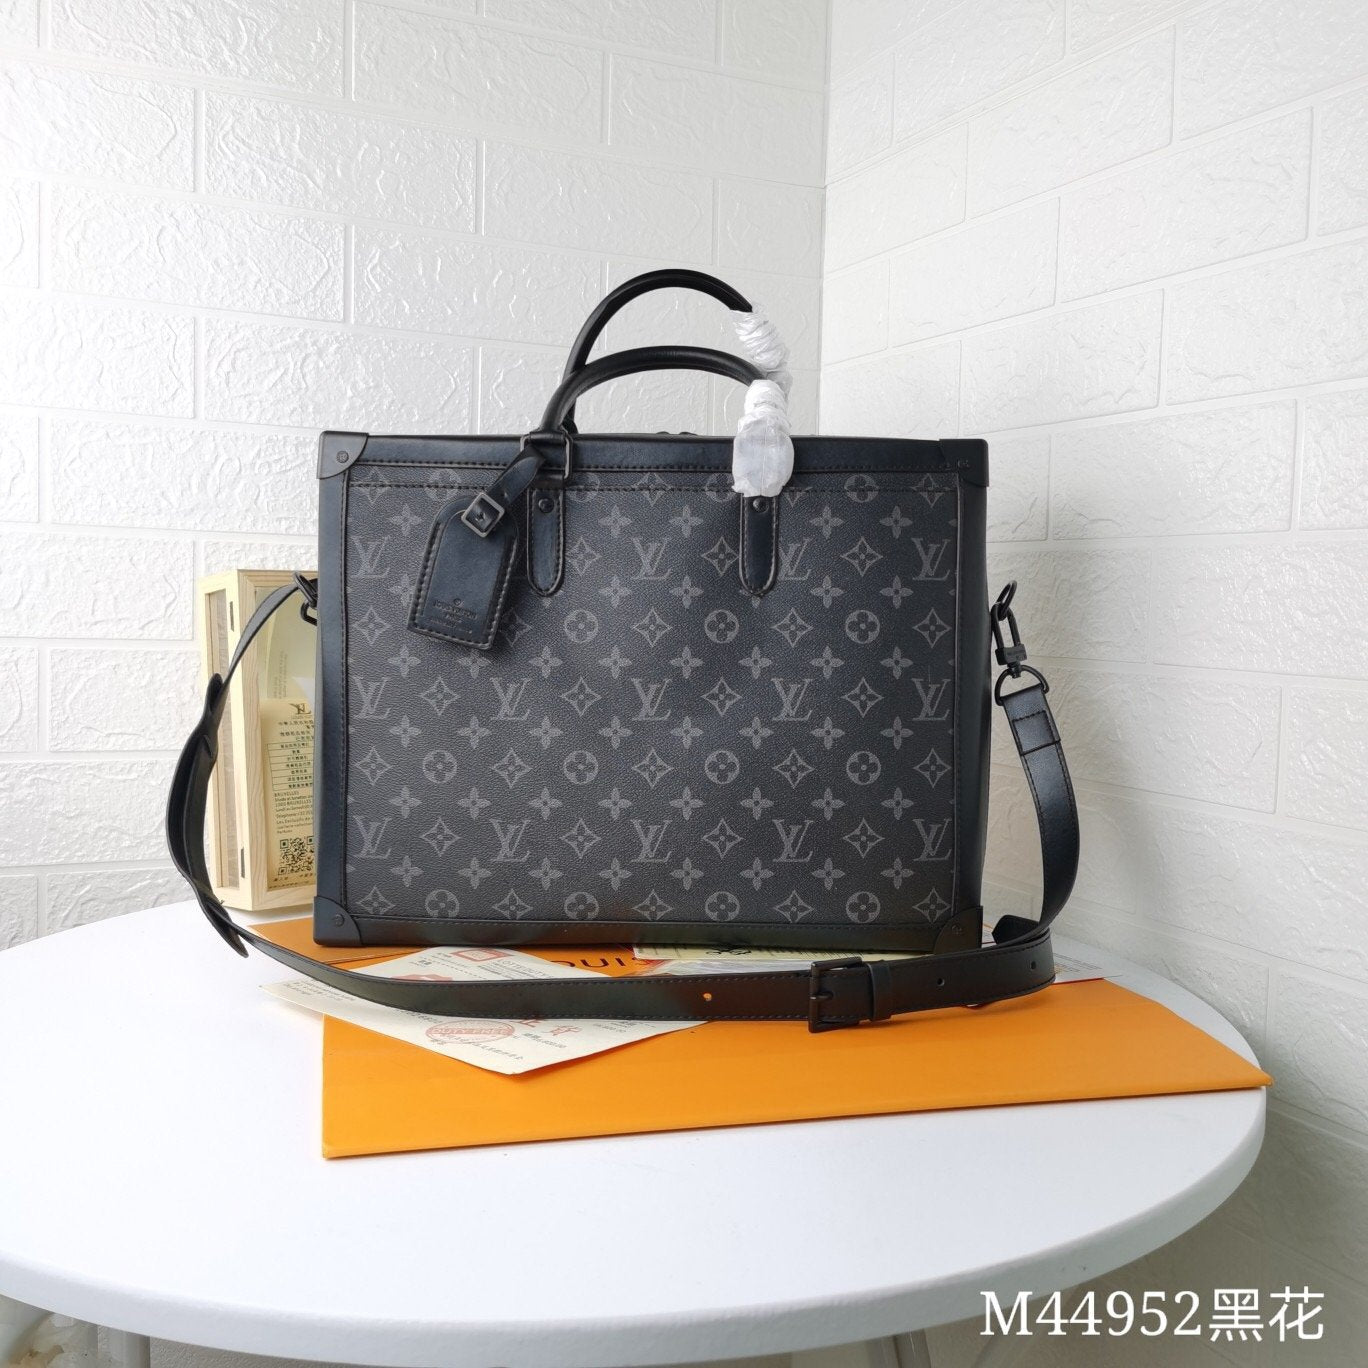 BL - High Quality Bags LUV 195